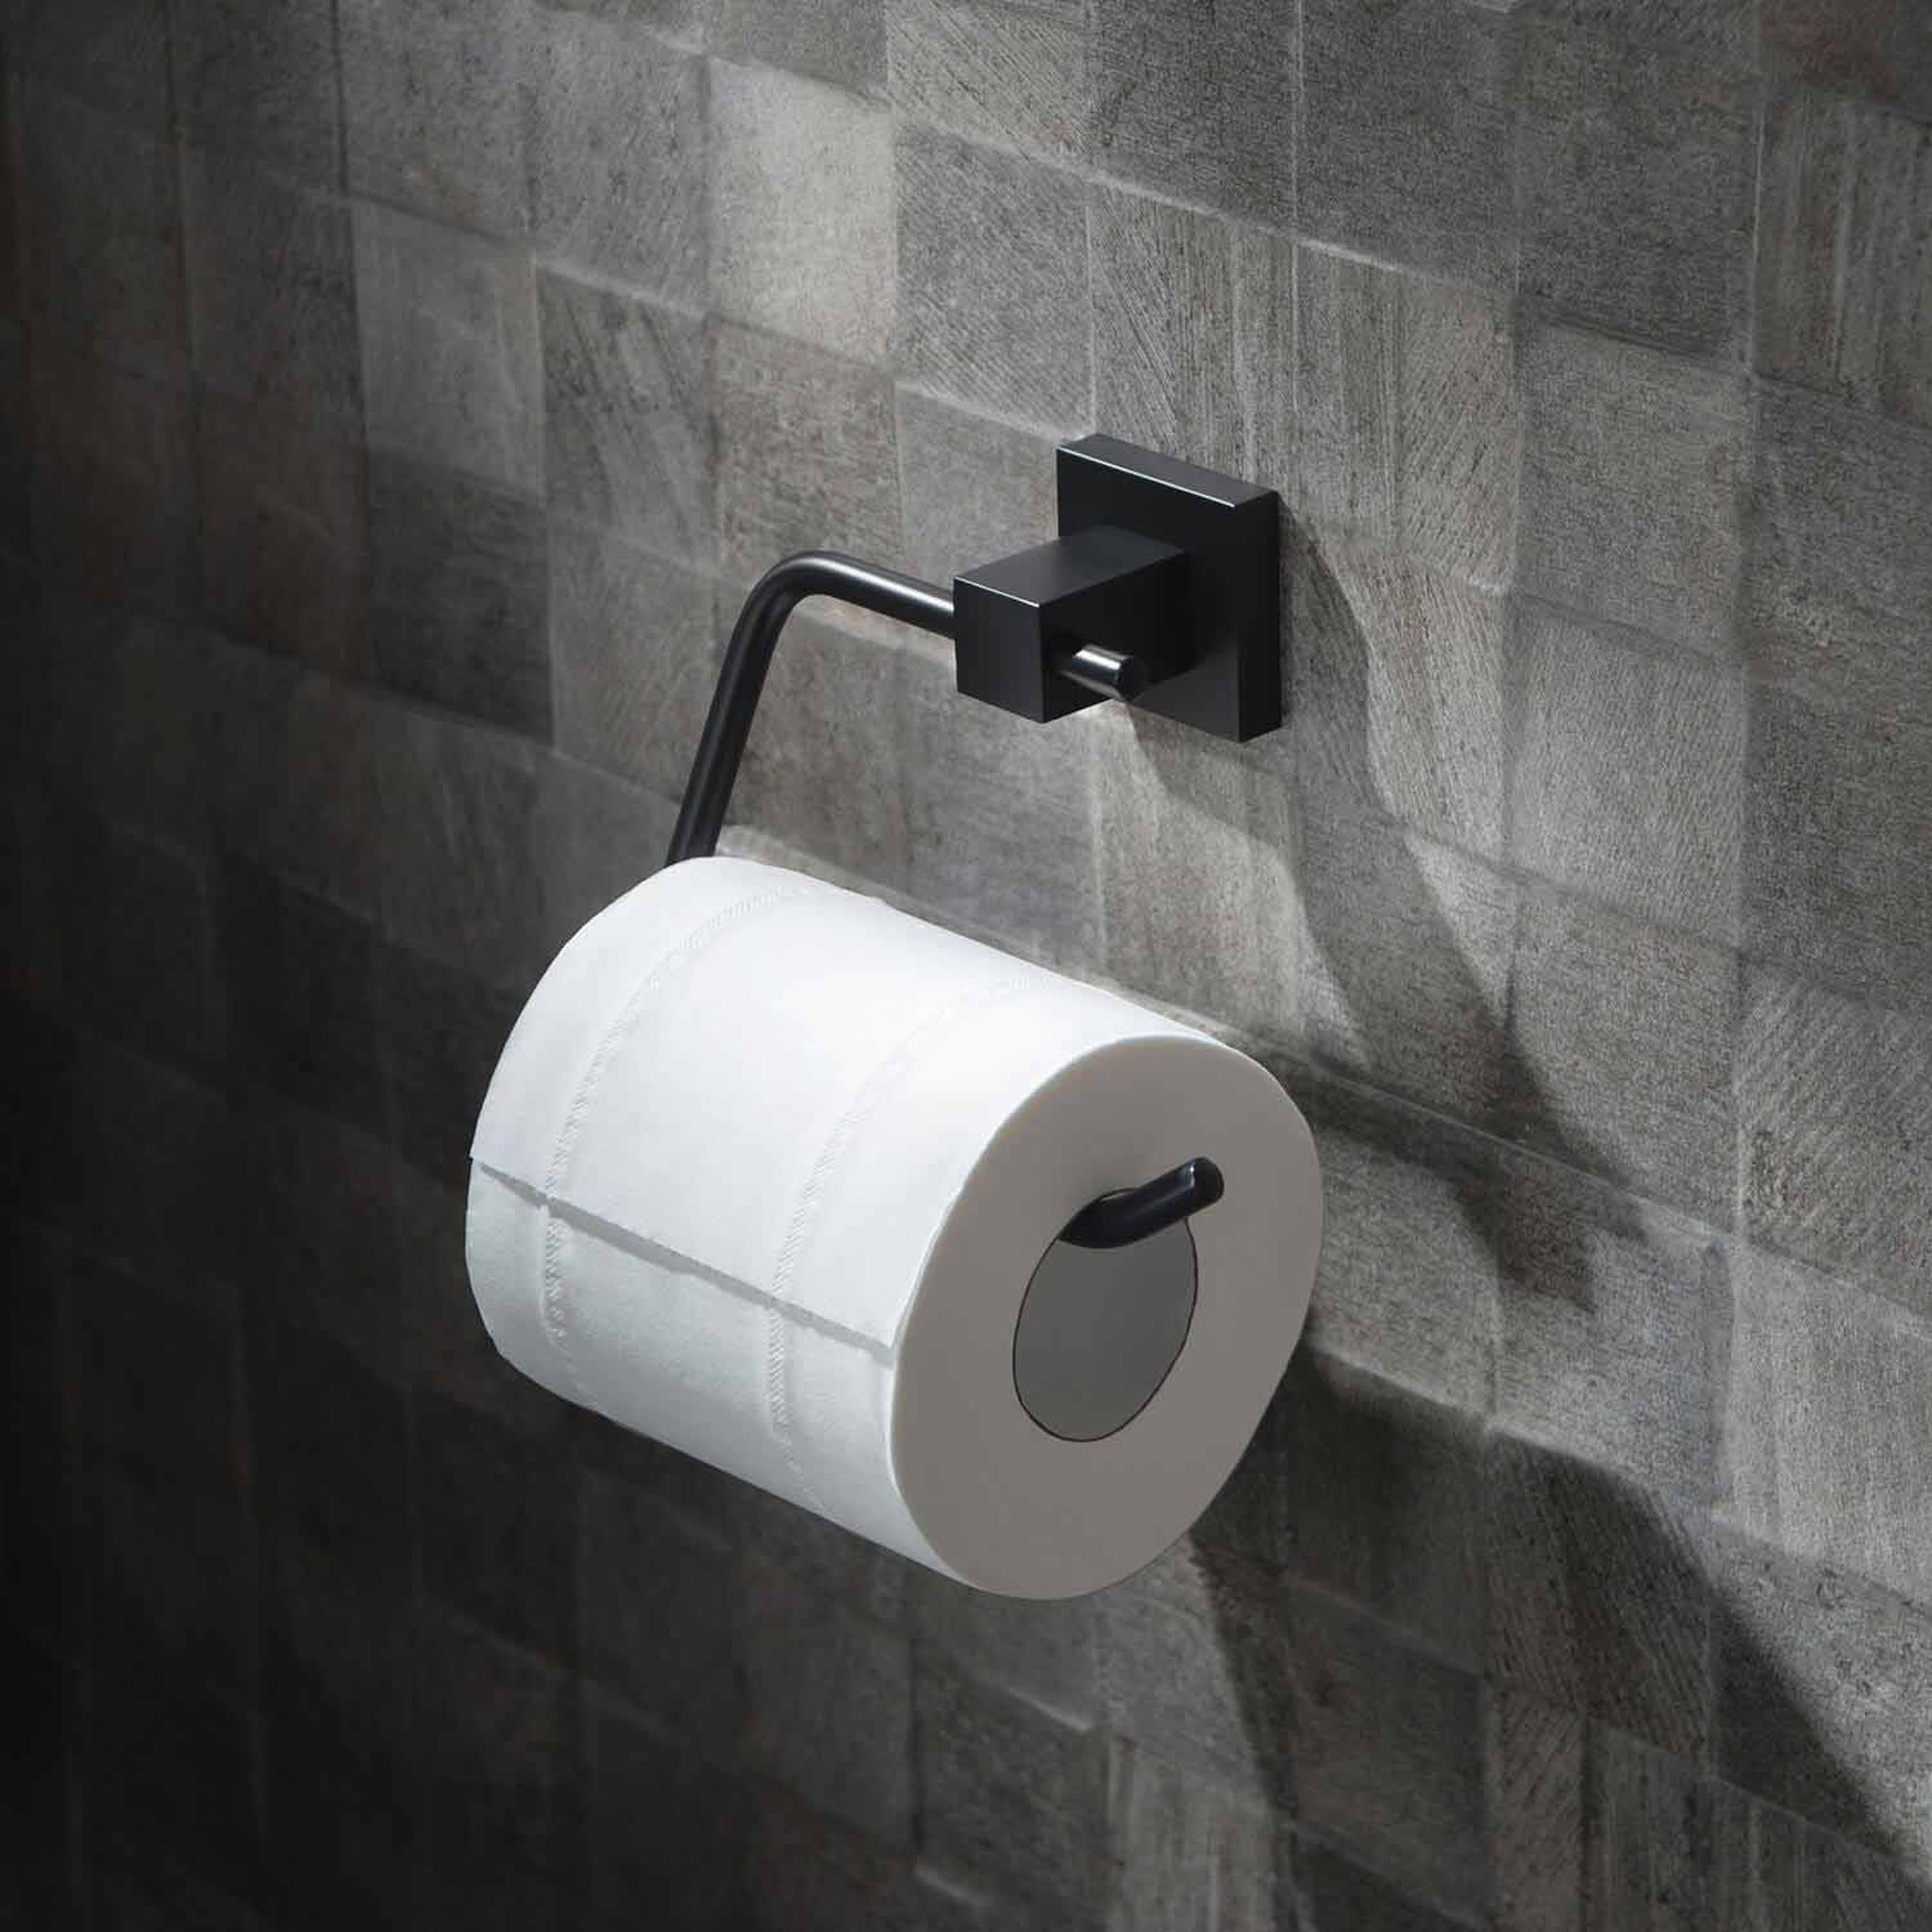 KIBI, KIBI Cube Brass Bathroom Toilet Paper Holder in Matte Black Finish